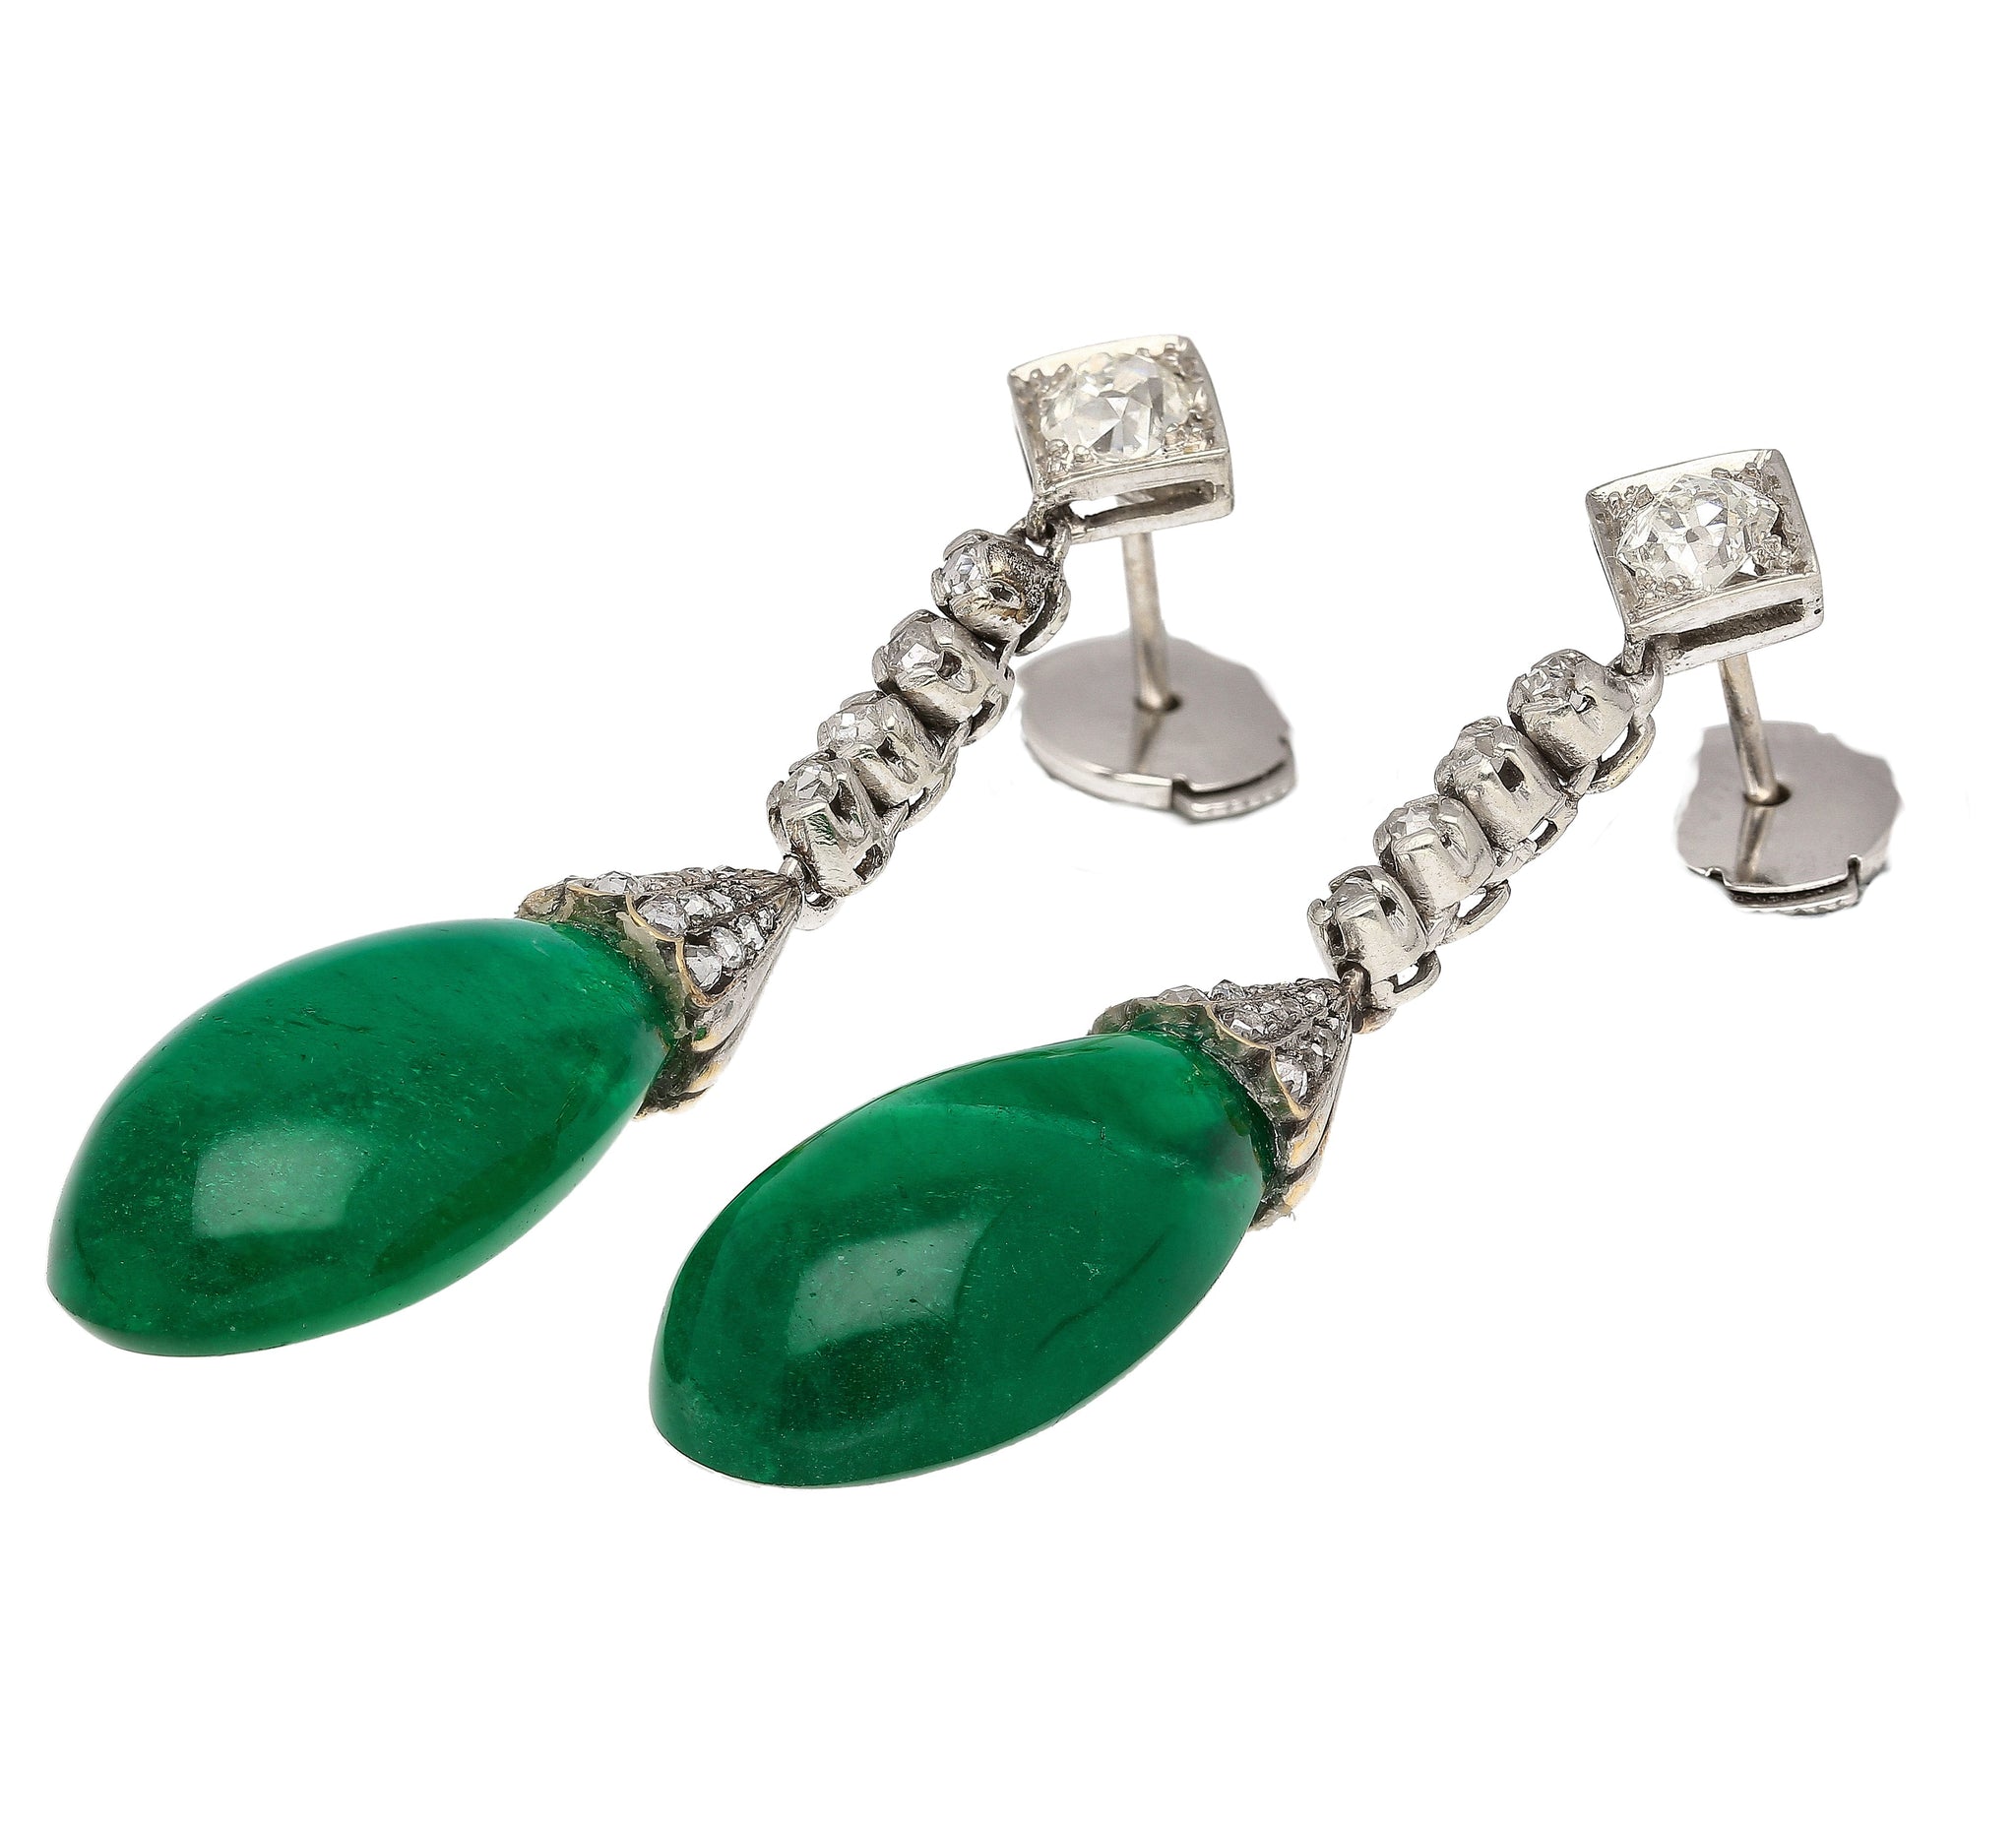 Art Deco Era 21 Carat Cabochon Pear Shape Emerald Drop Earrings | Circa 1940